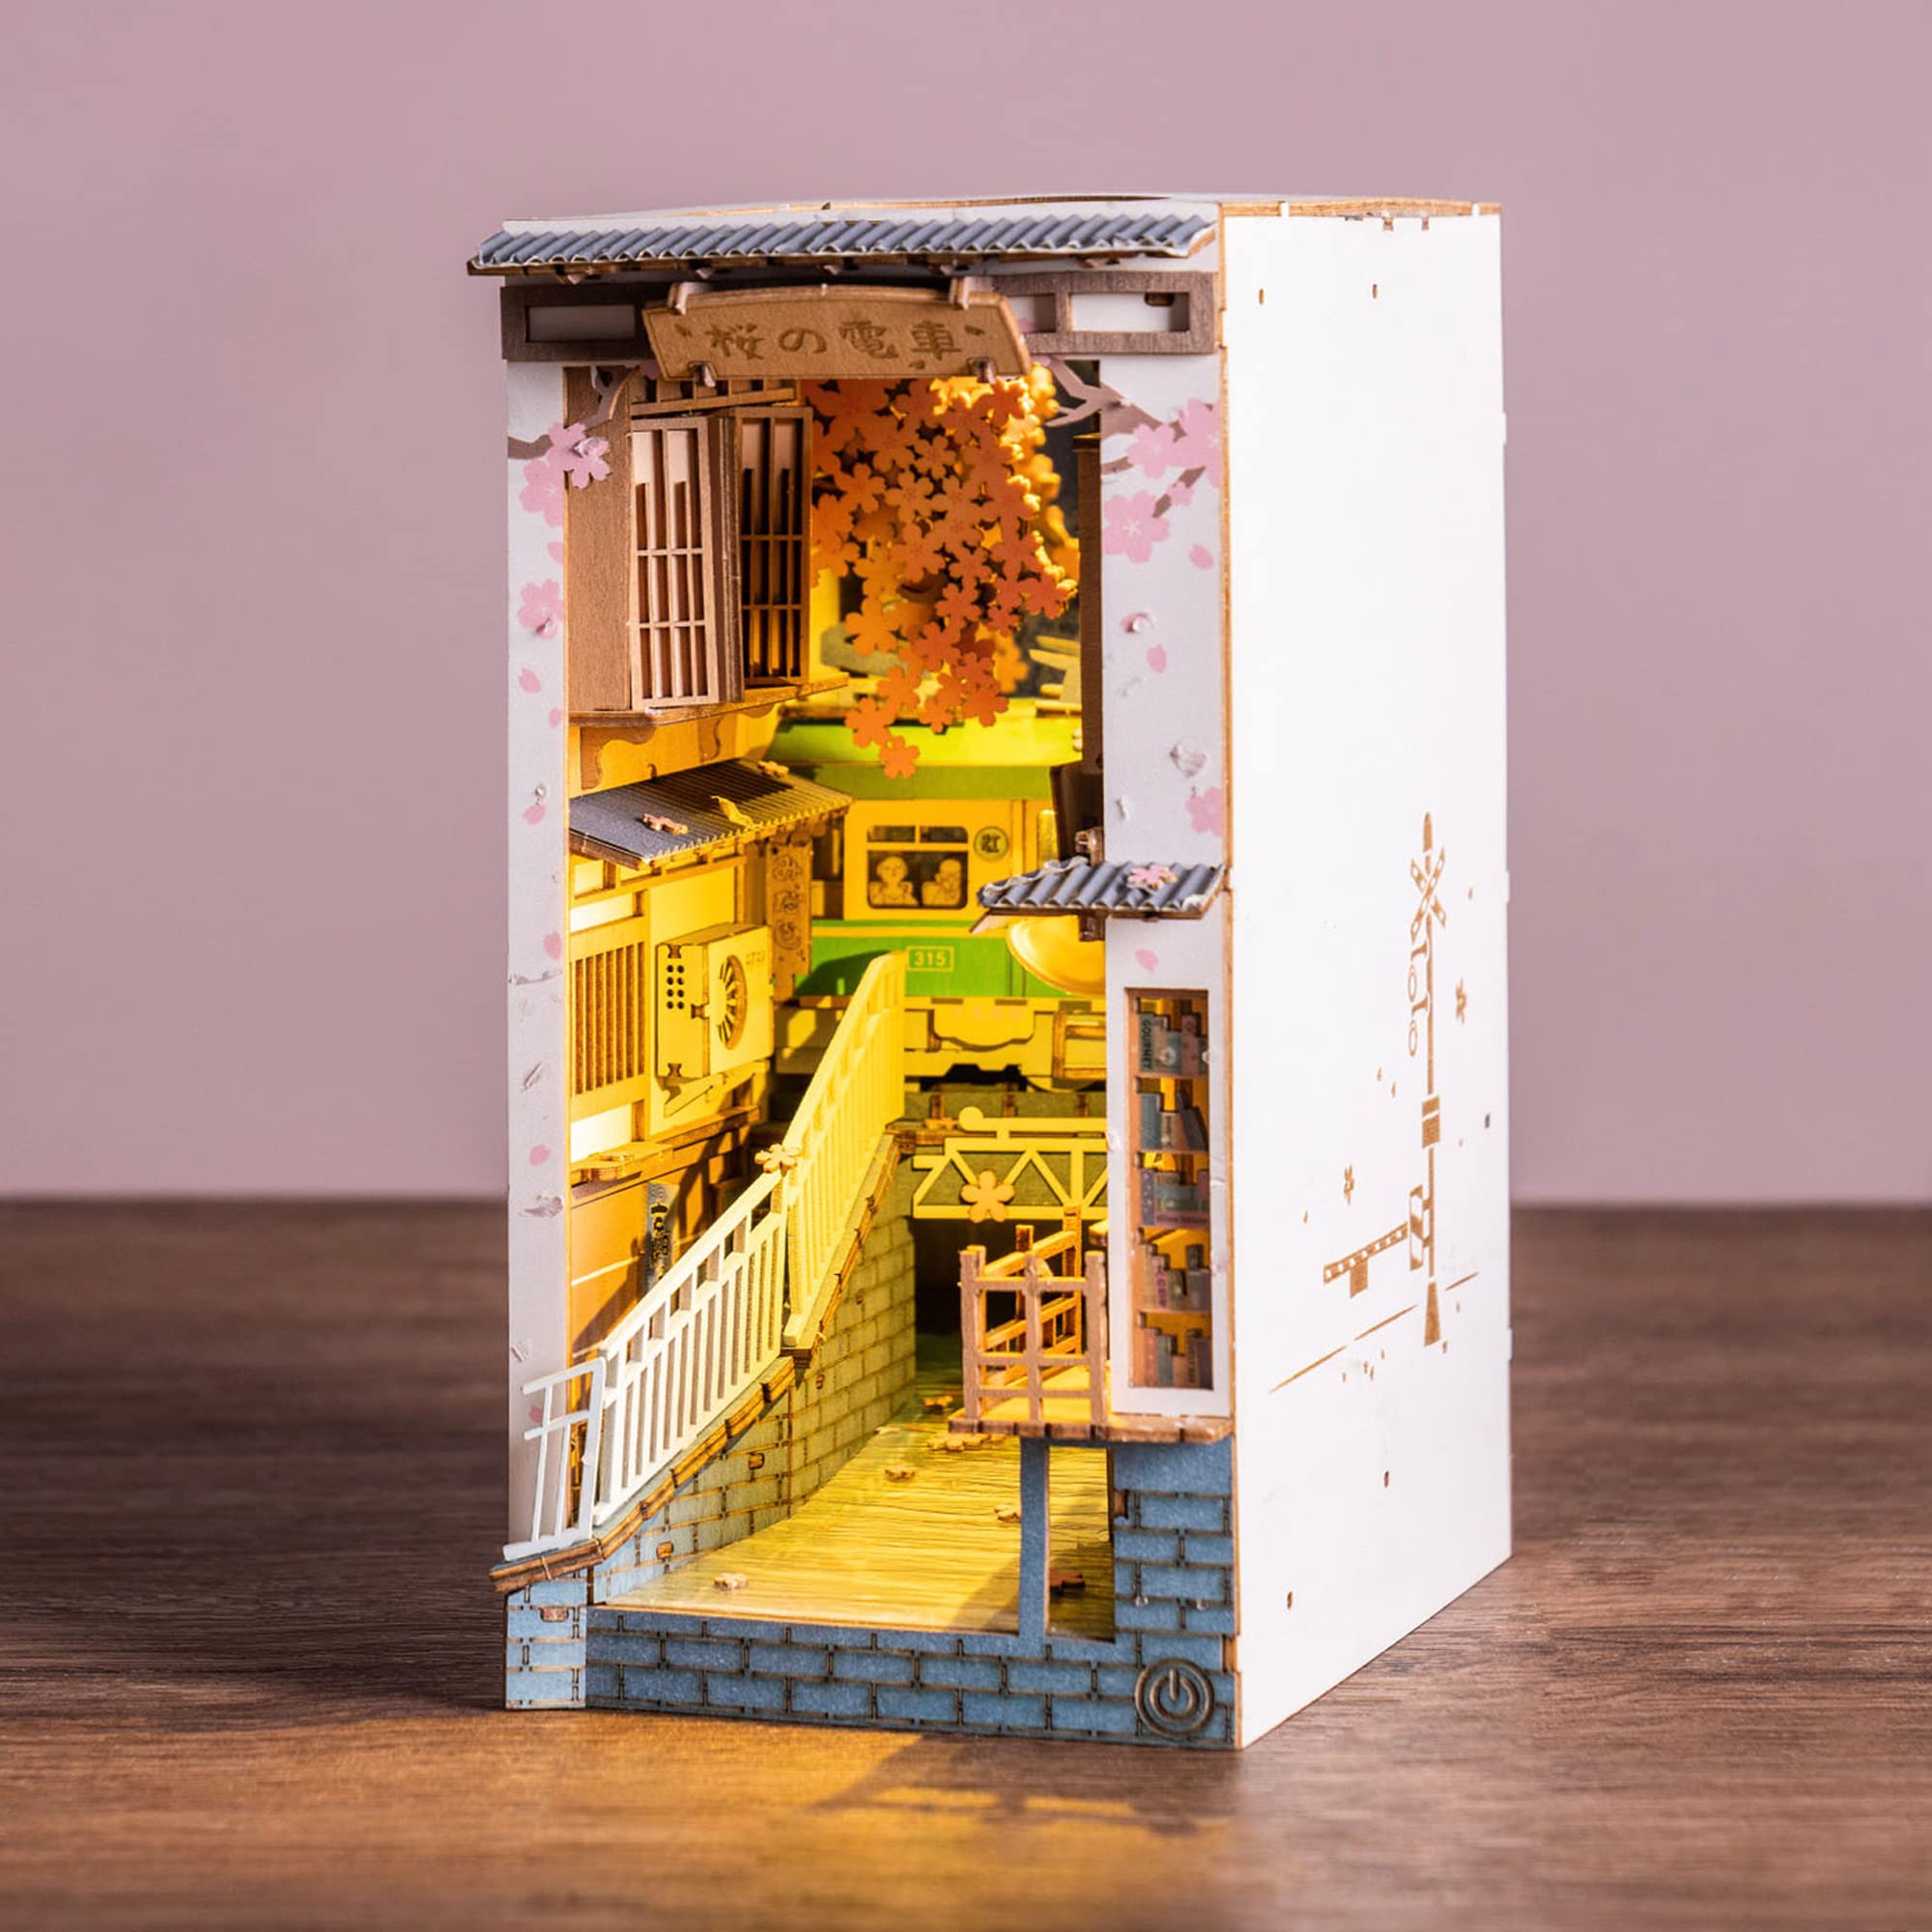 Rolife DIY Book Nook Kits Sakura Densya, 3D Wooden Puzzles Bookshelf Insert Decorative Bookend Model Kits with LED, DIY Crafts/Birthday Gifts/Home Decor for Girls&Boys Teens&Adults (Sakura Densya)